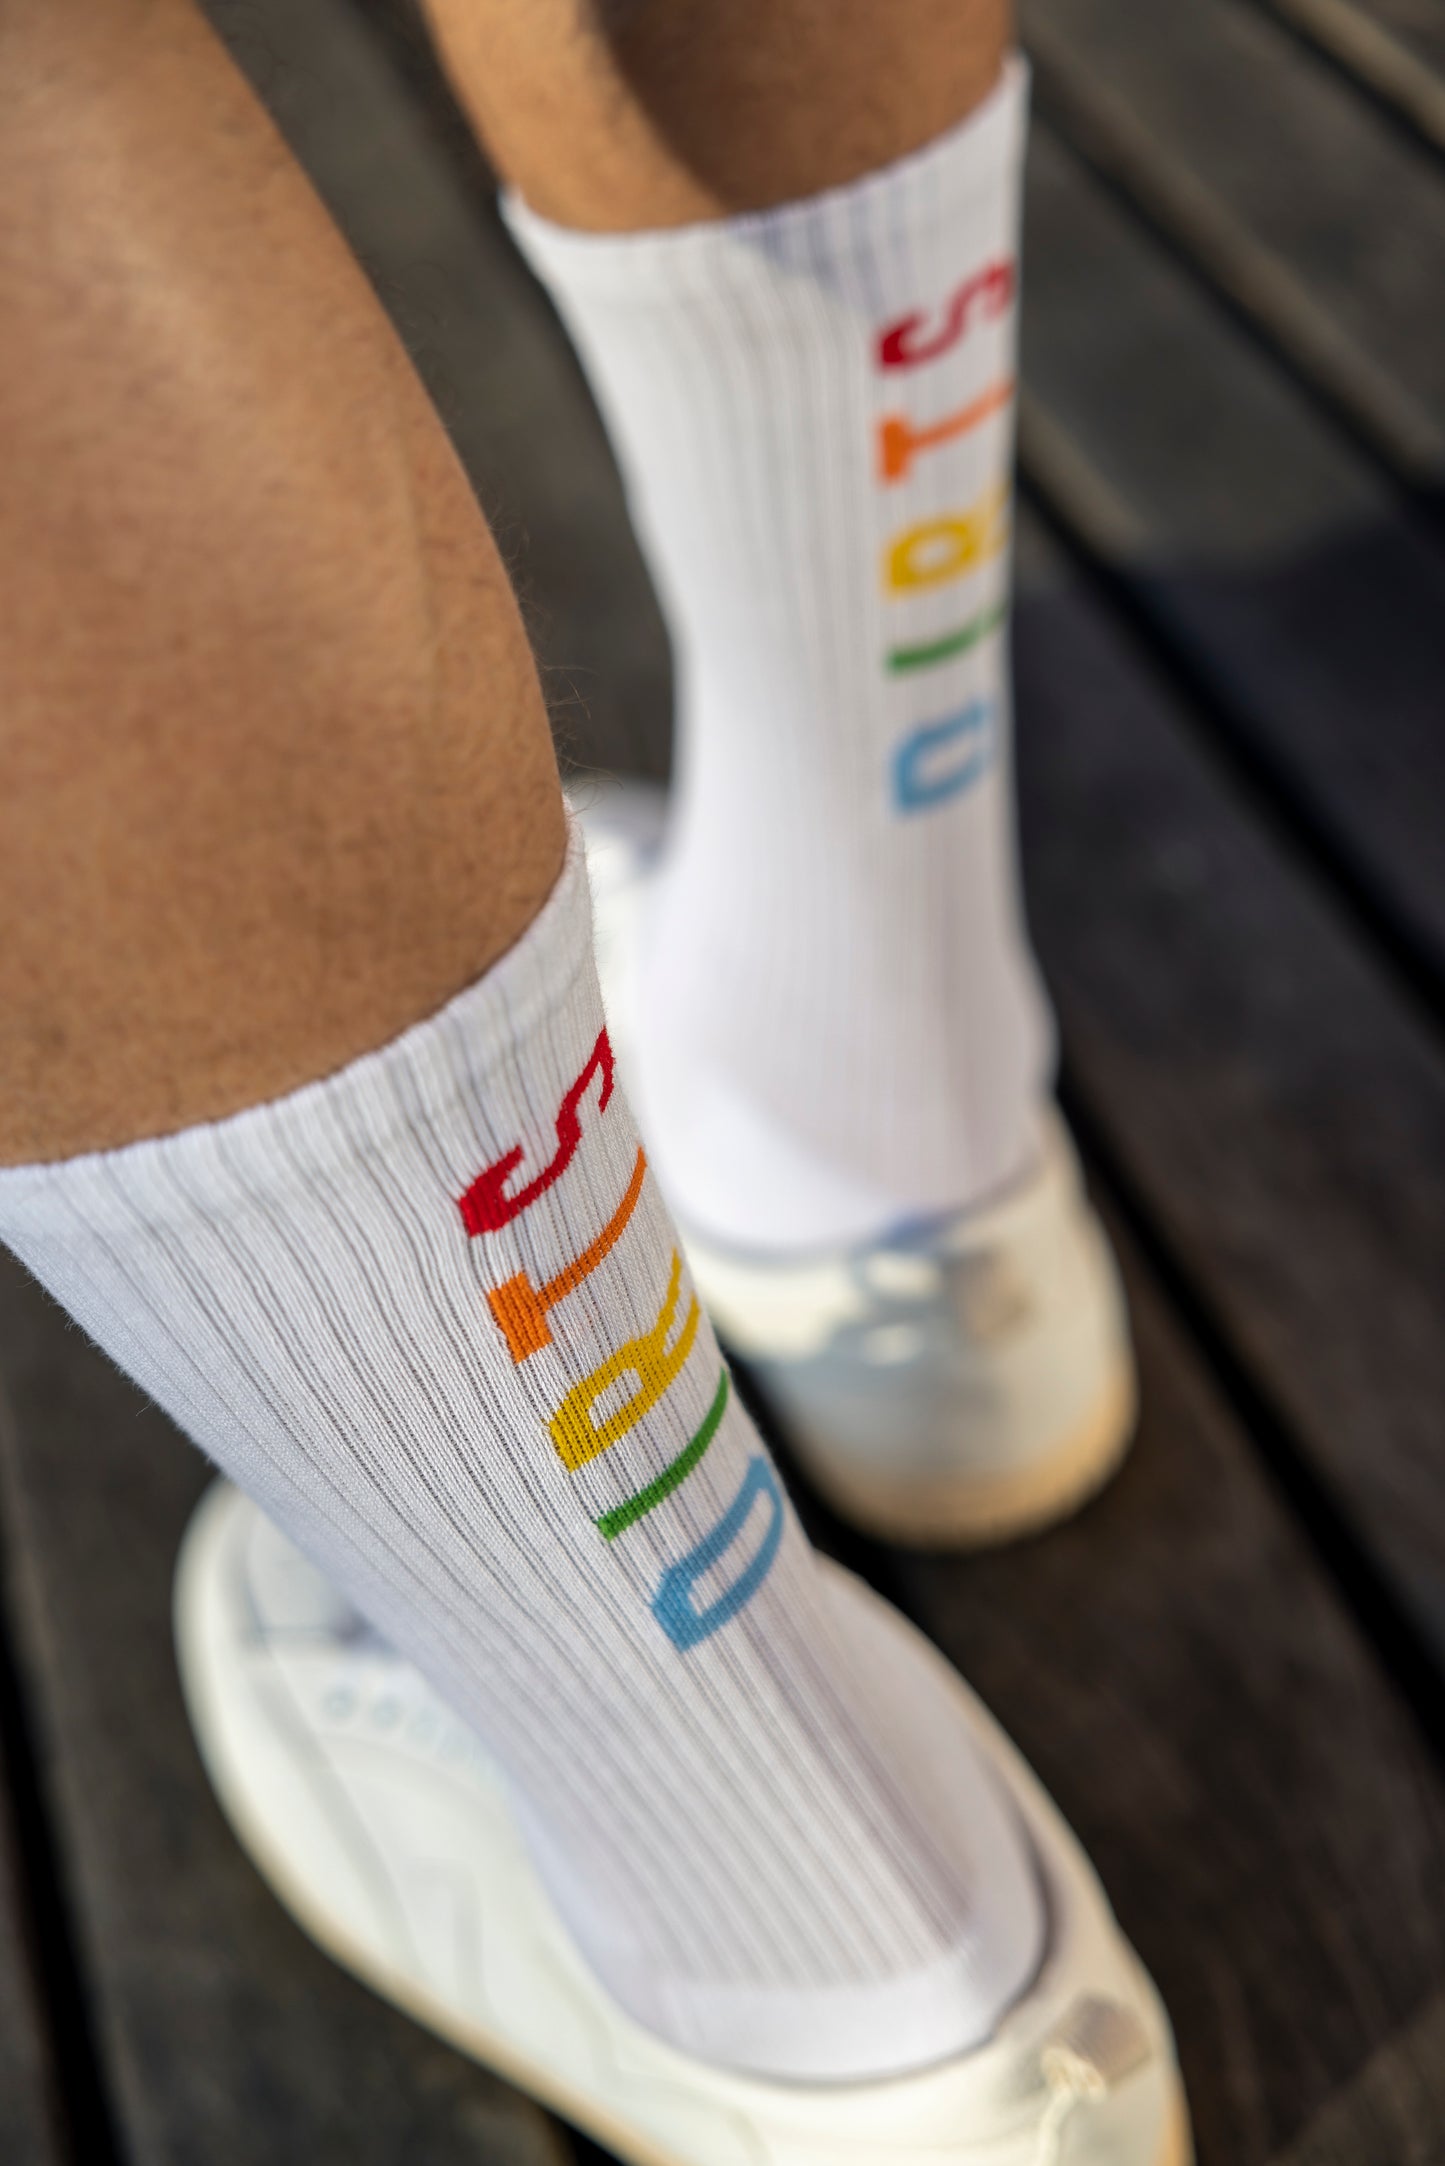 Rainbow Socks 2.0, white